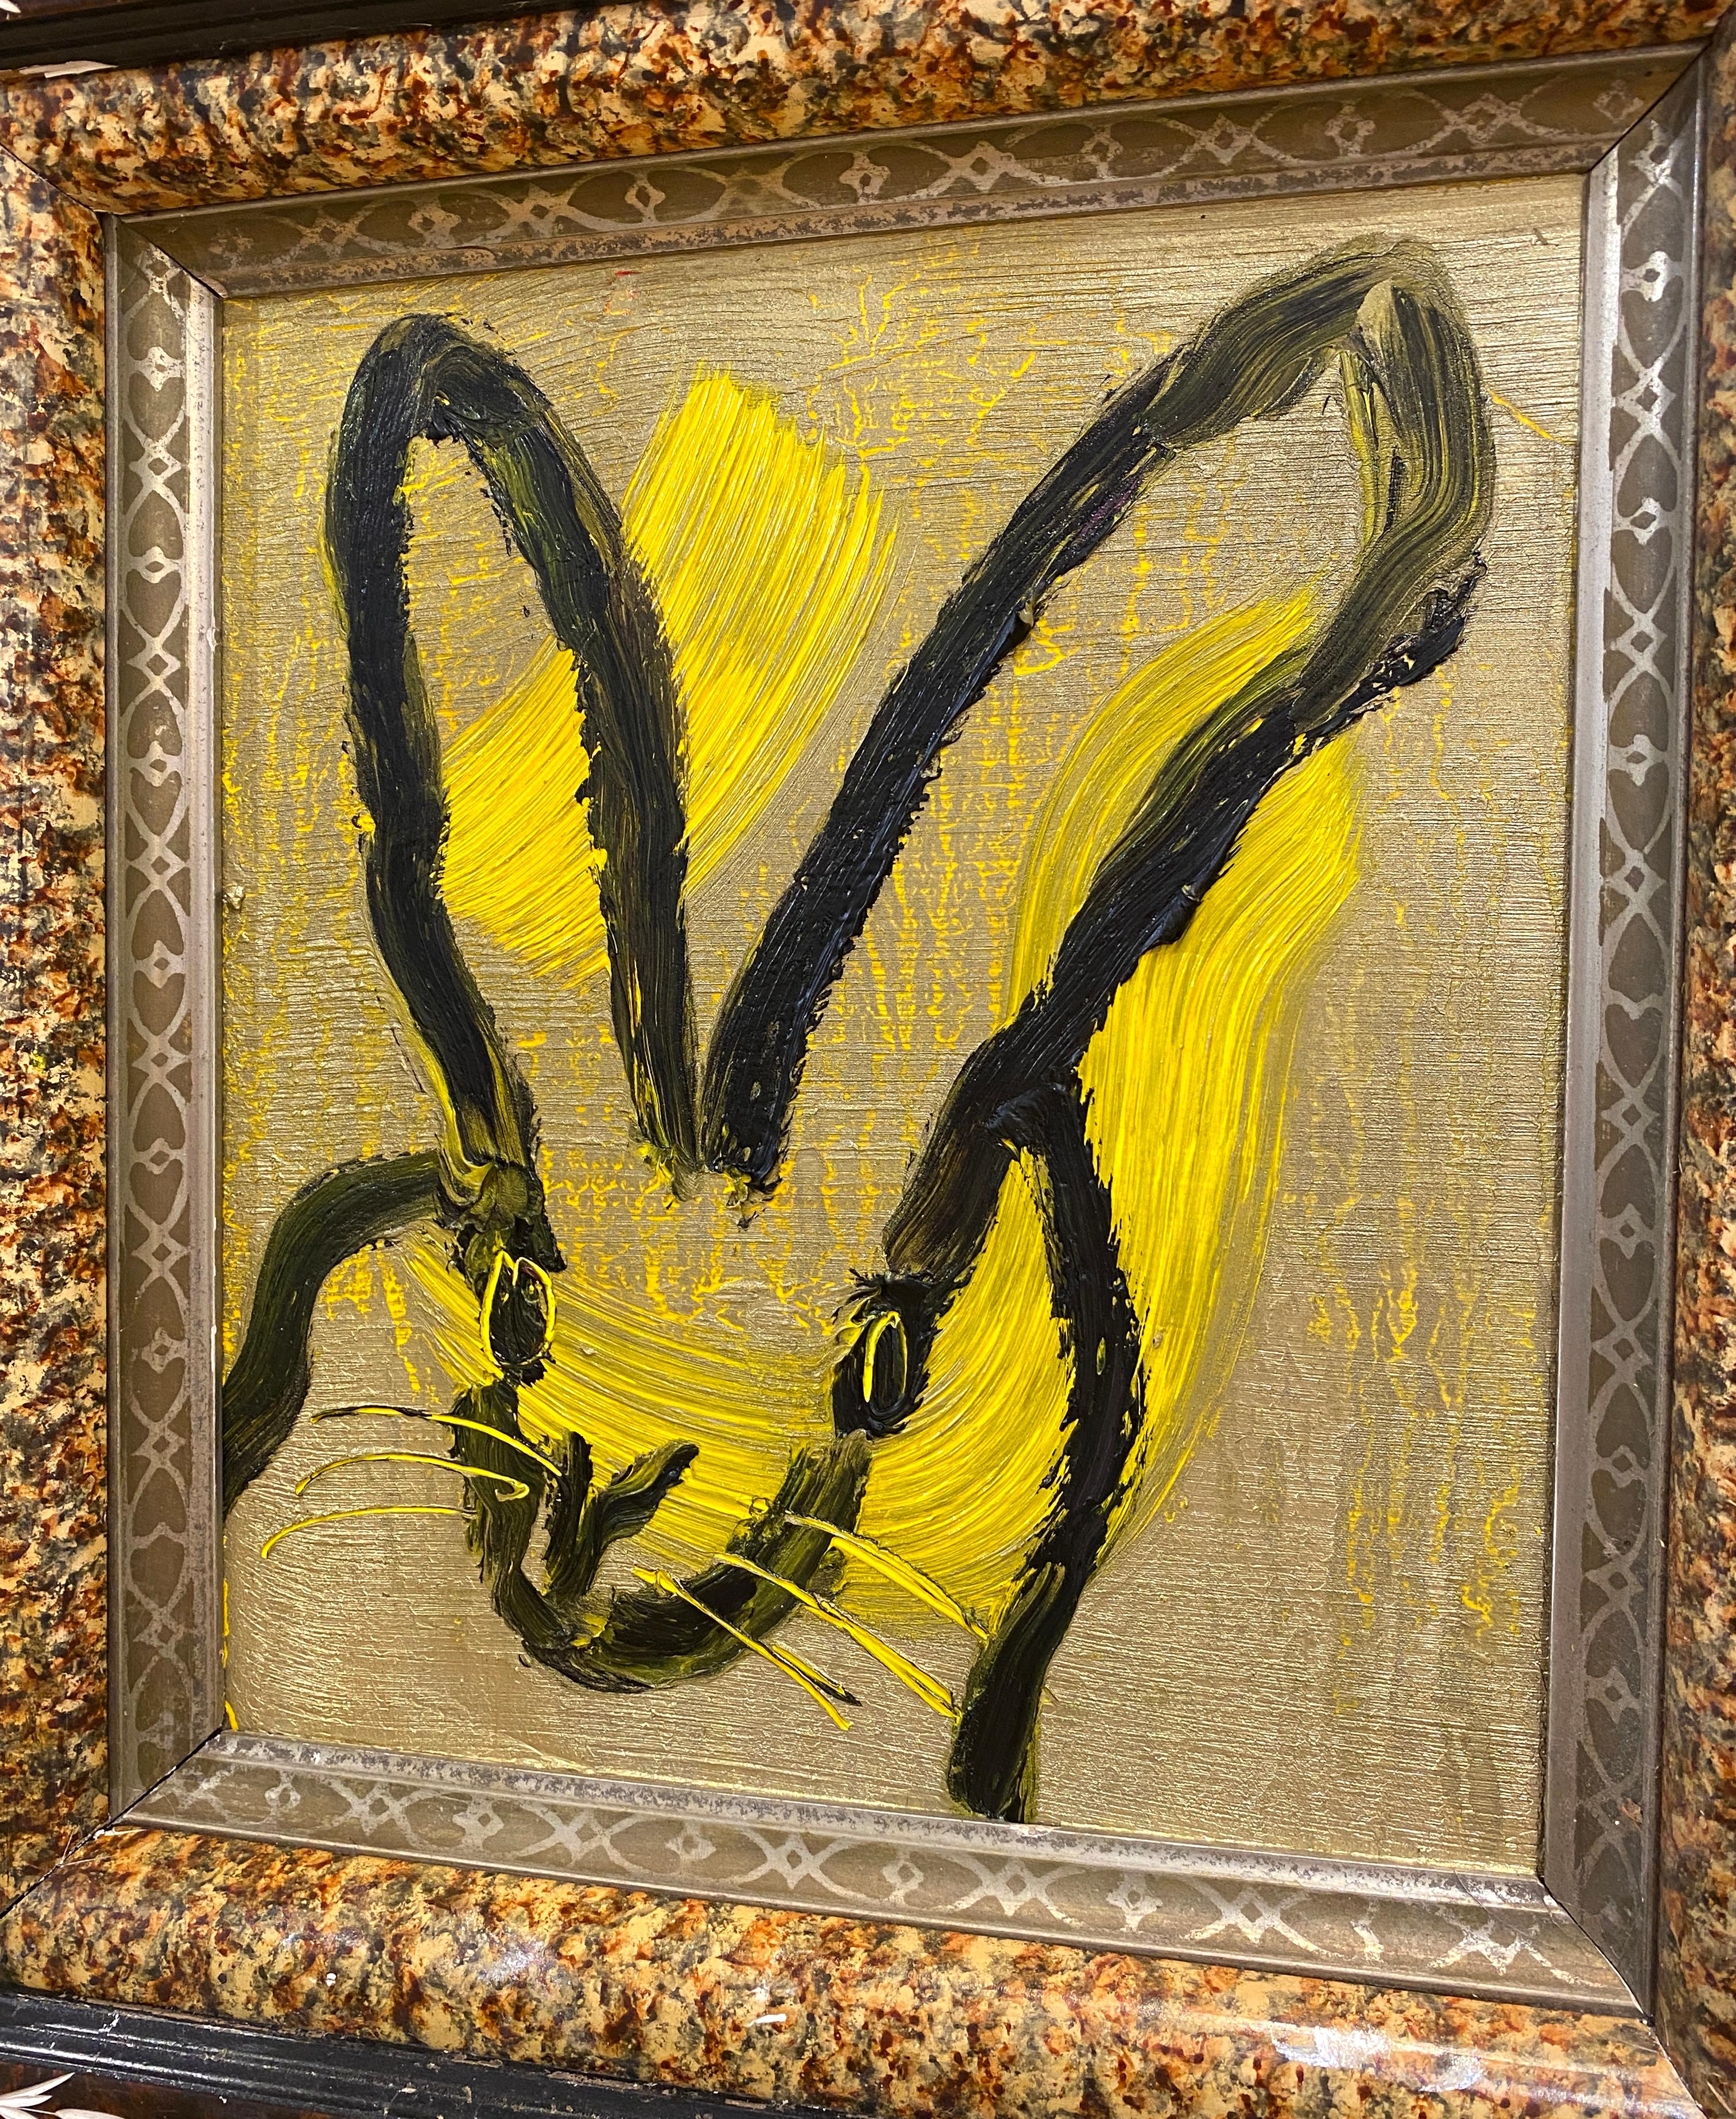 Artist:  Slonem, Hunt
Title:  Roderick
Series:  Bunnies
Date:  2021
Medium:  Oil on panel
Unframed Dimensions:  12